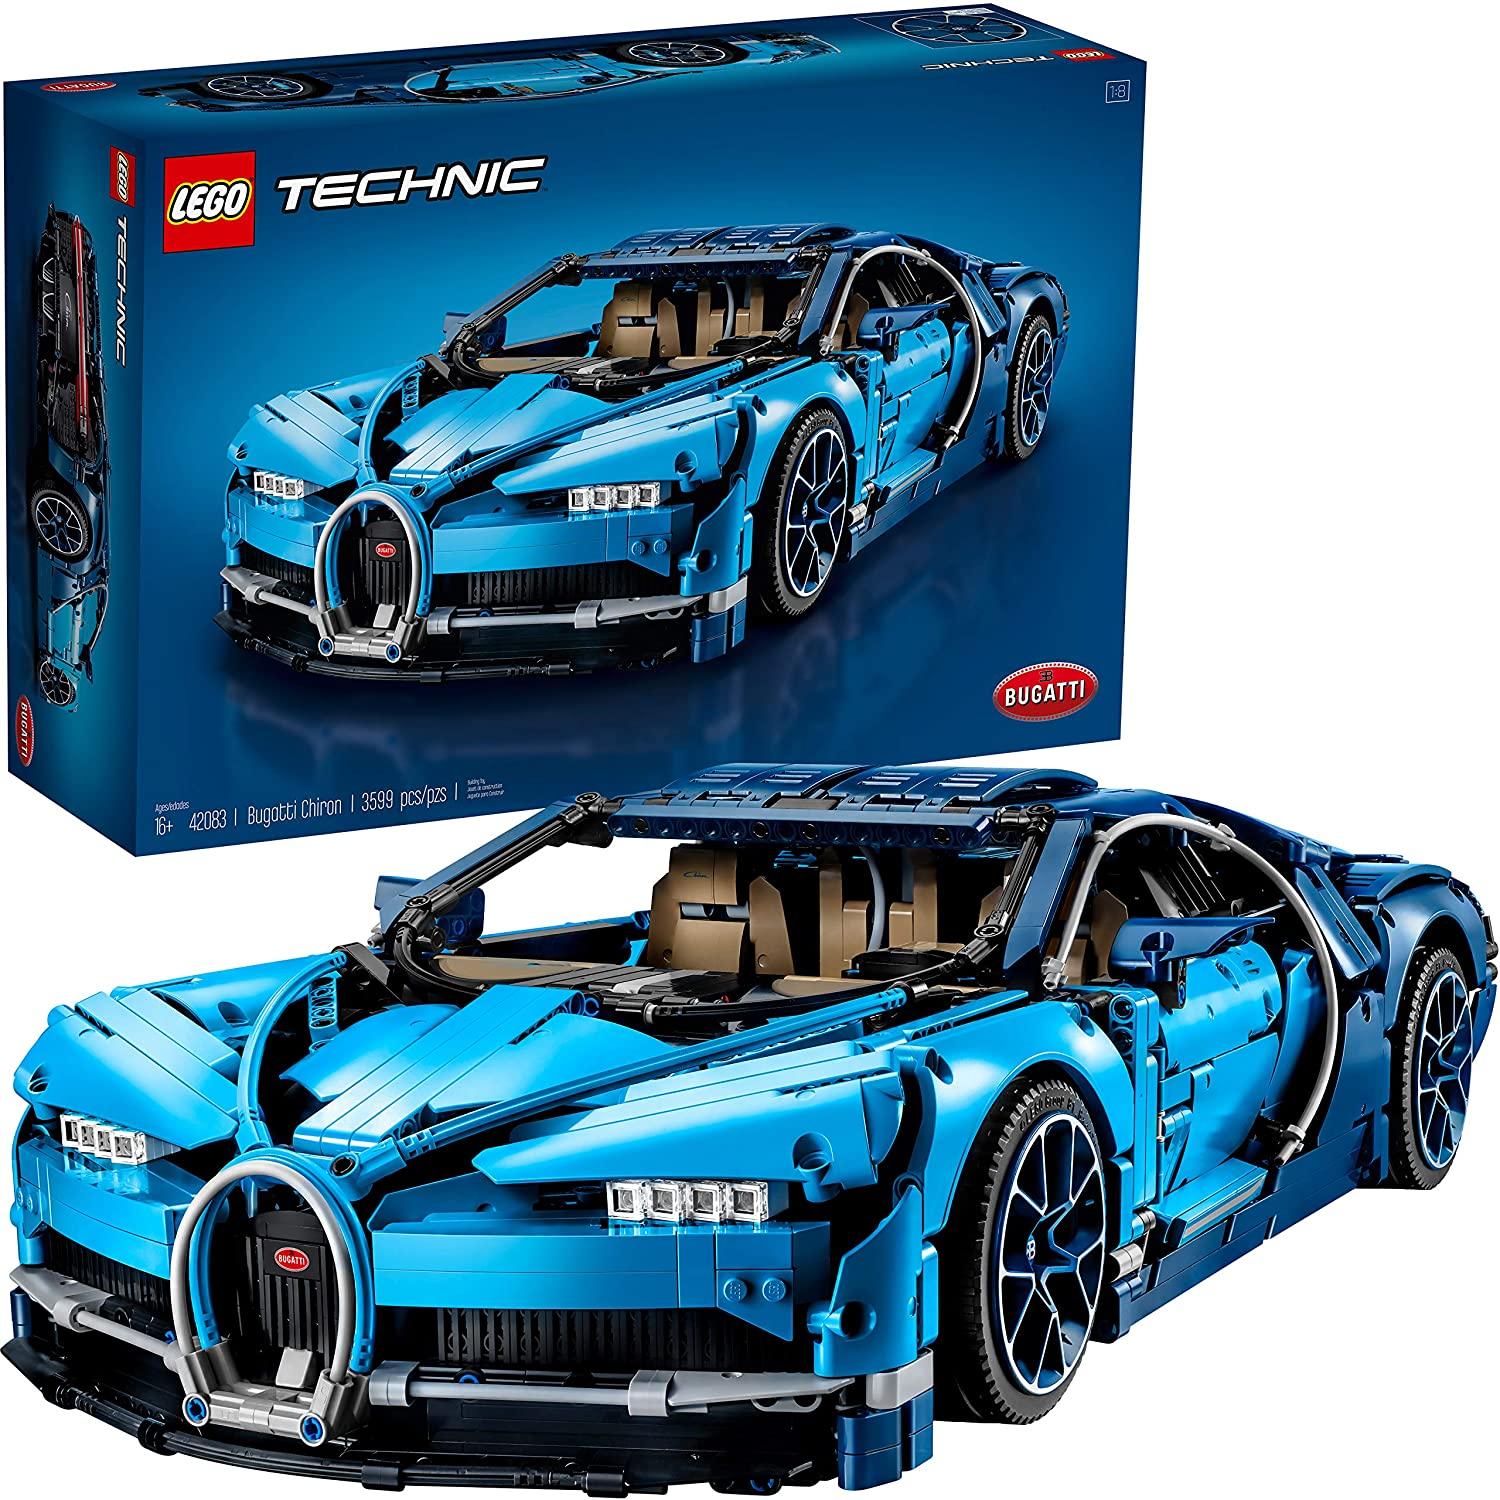 LEGO Technic Bugatti Chiron 42083 race car building kit